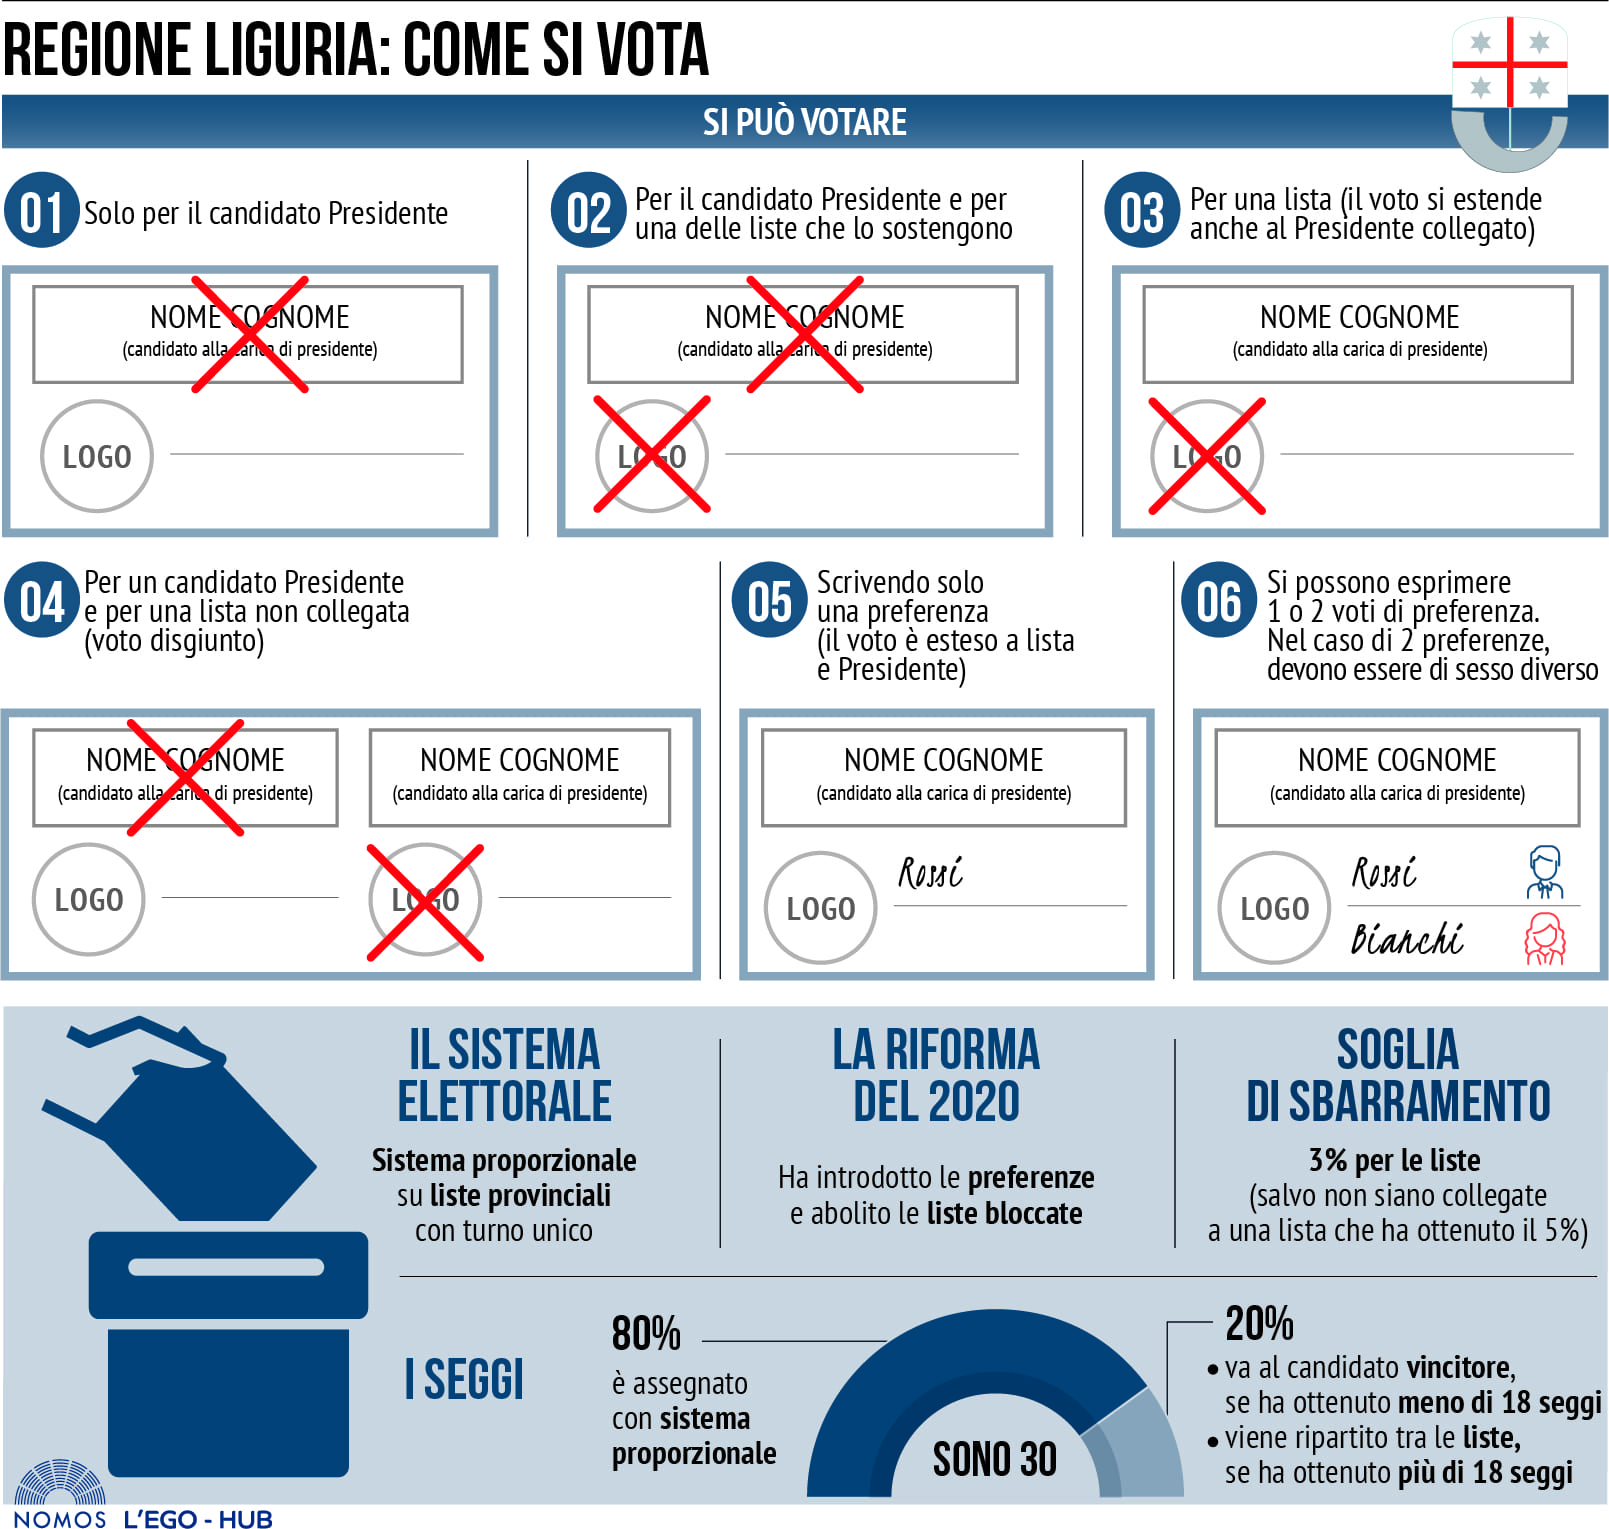 Il_sistema_elettorale_in_Liguria.jpg